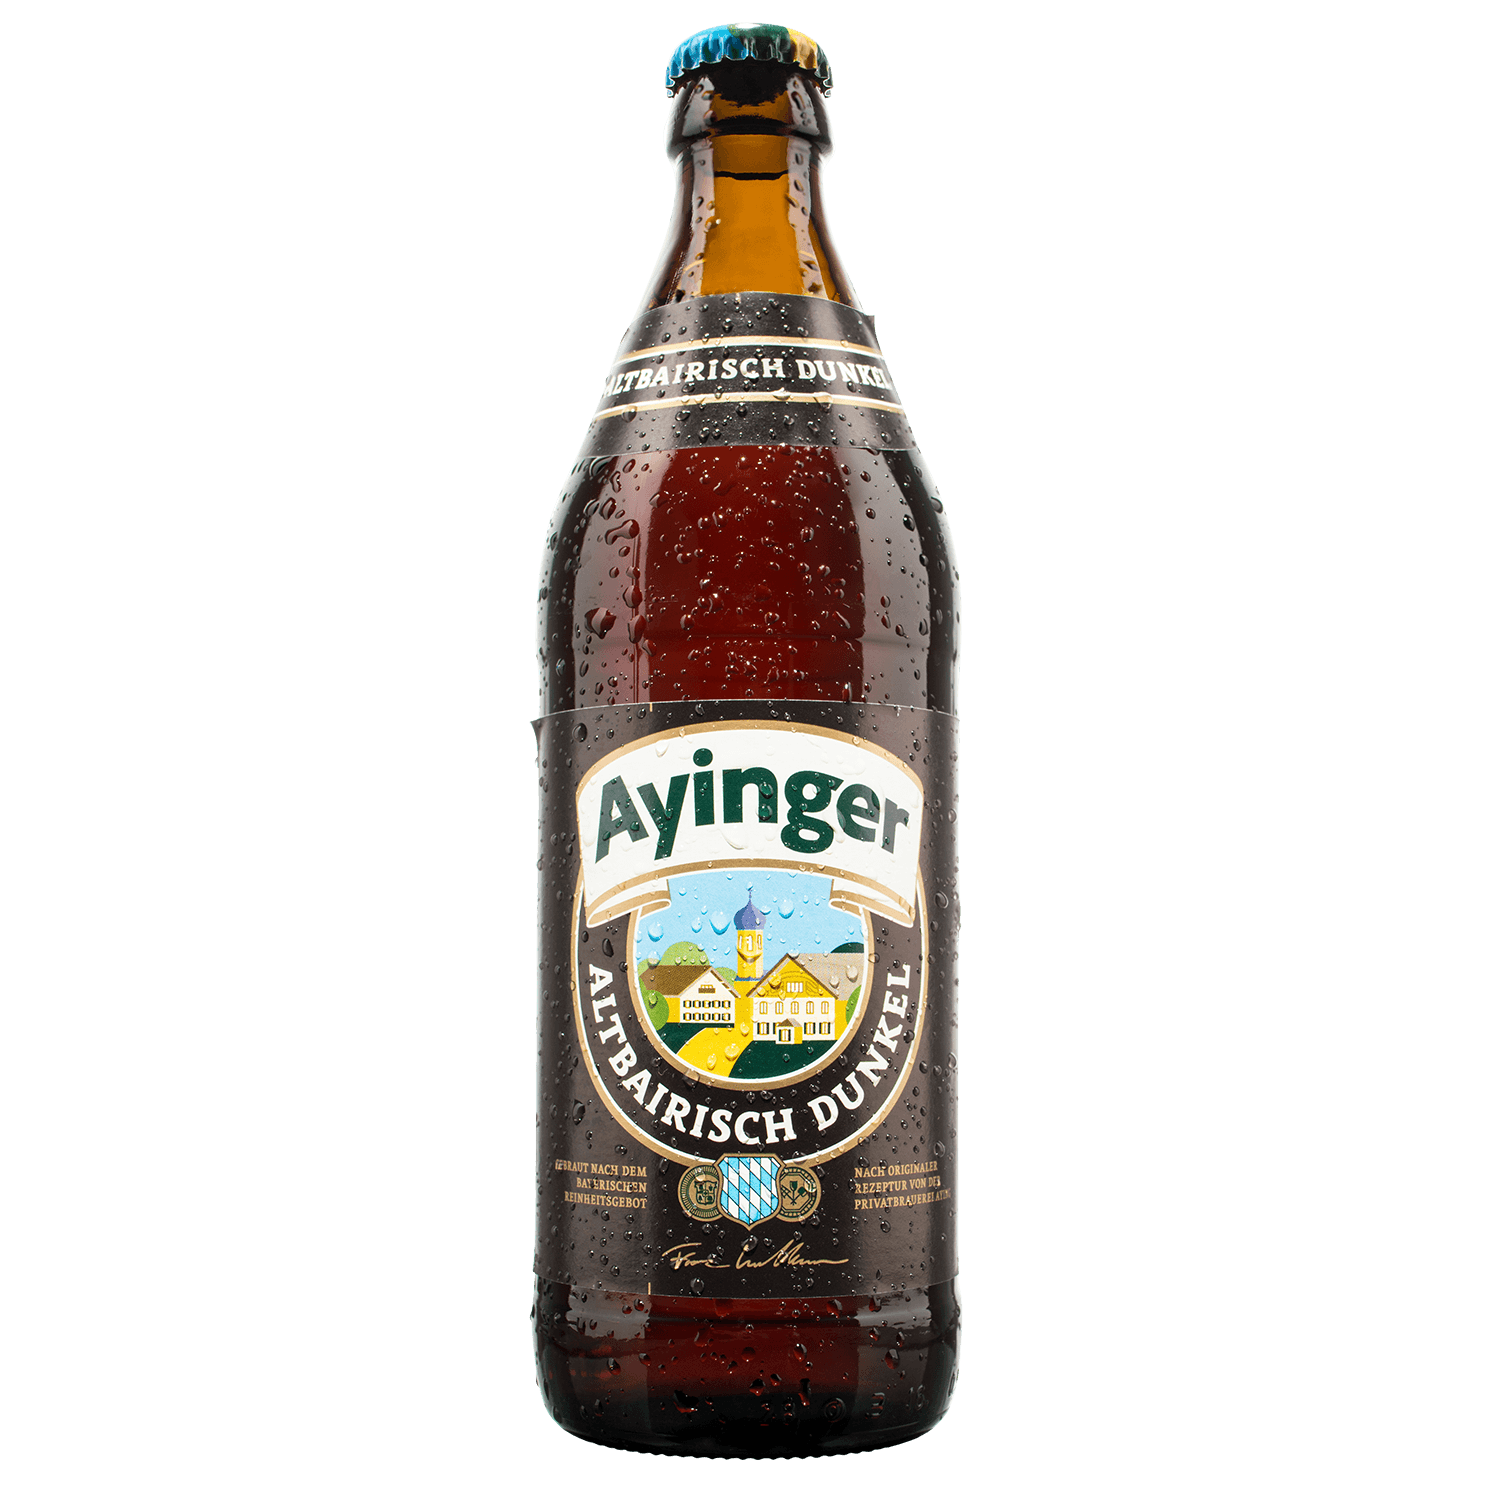 Ayinger Logo - Ayinger Altbairisch Dunkel